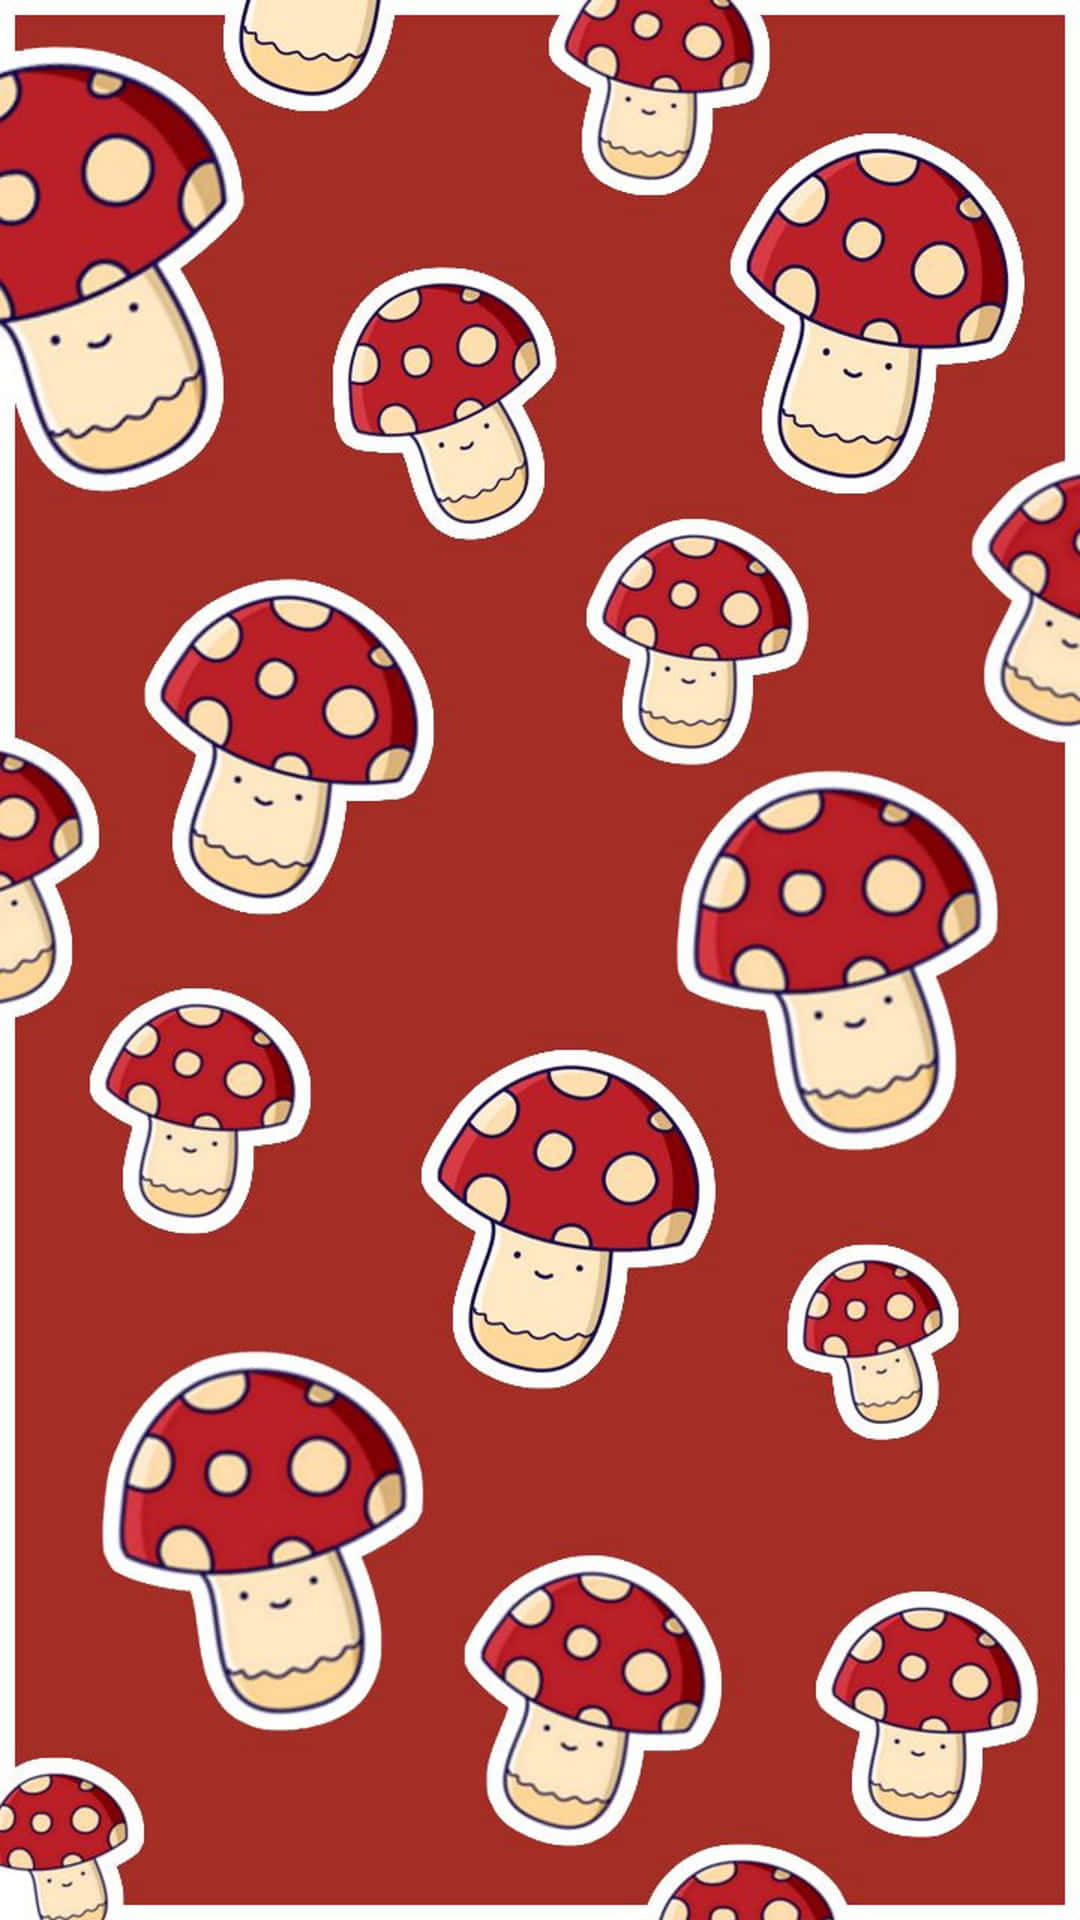 Cute and Colorful Kawaii Mushroom Wallpaper Wallpaper